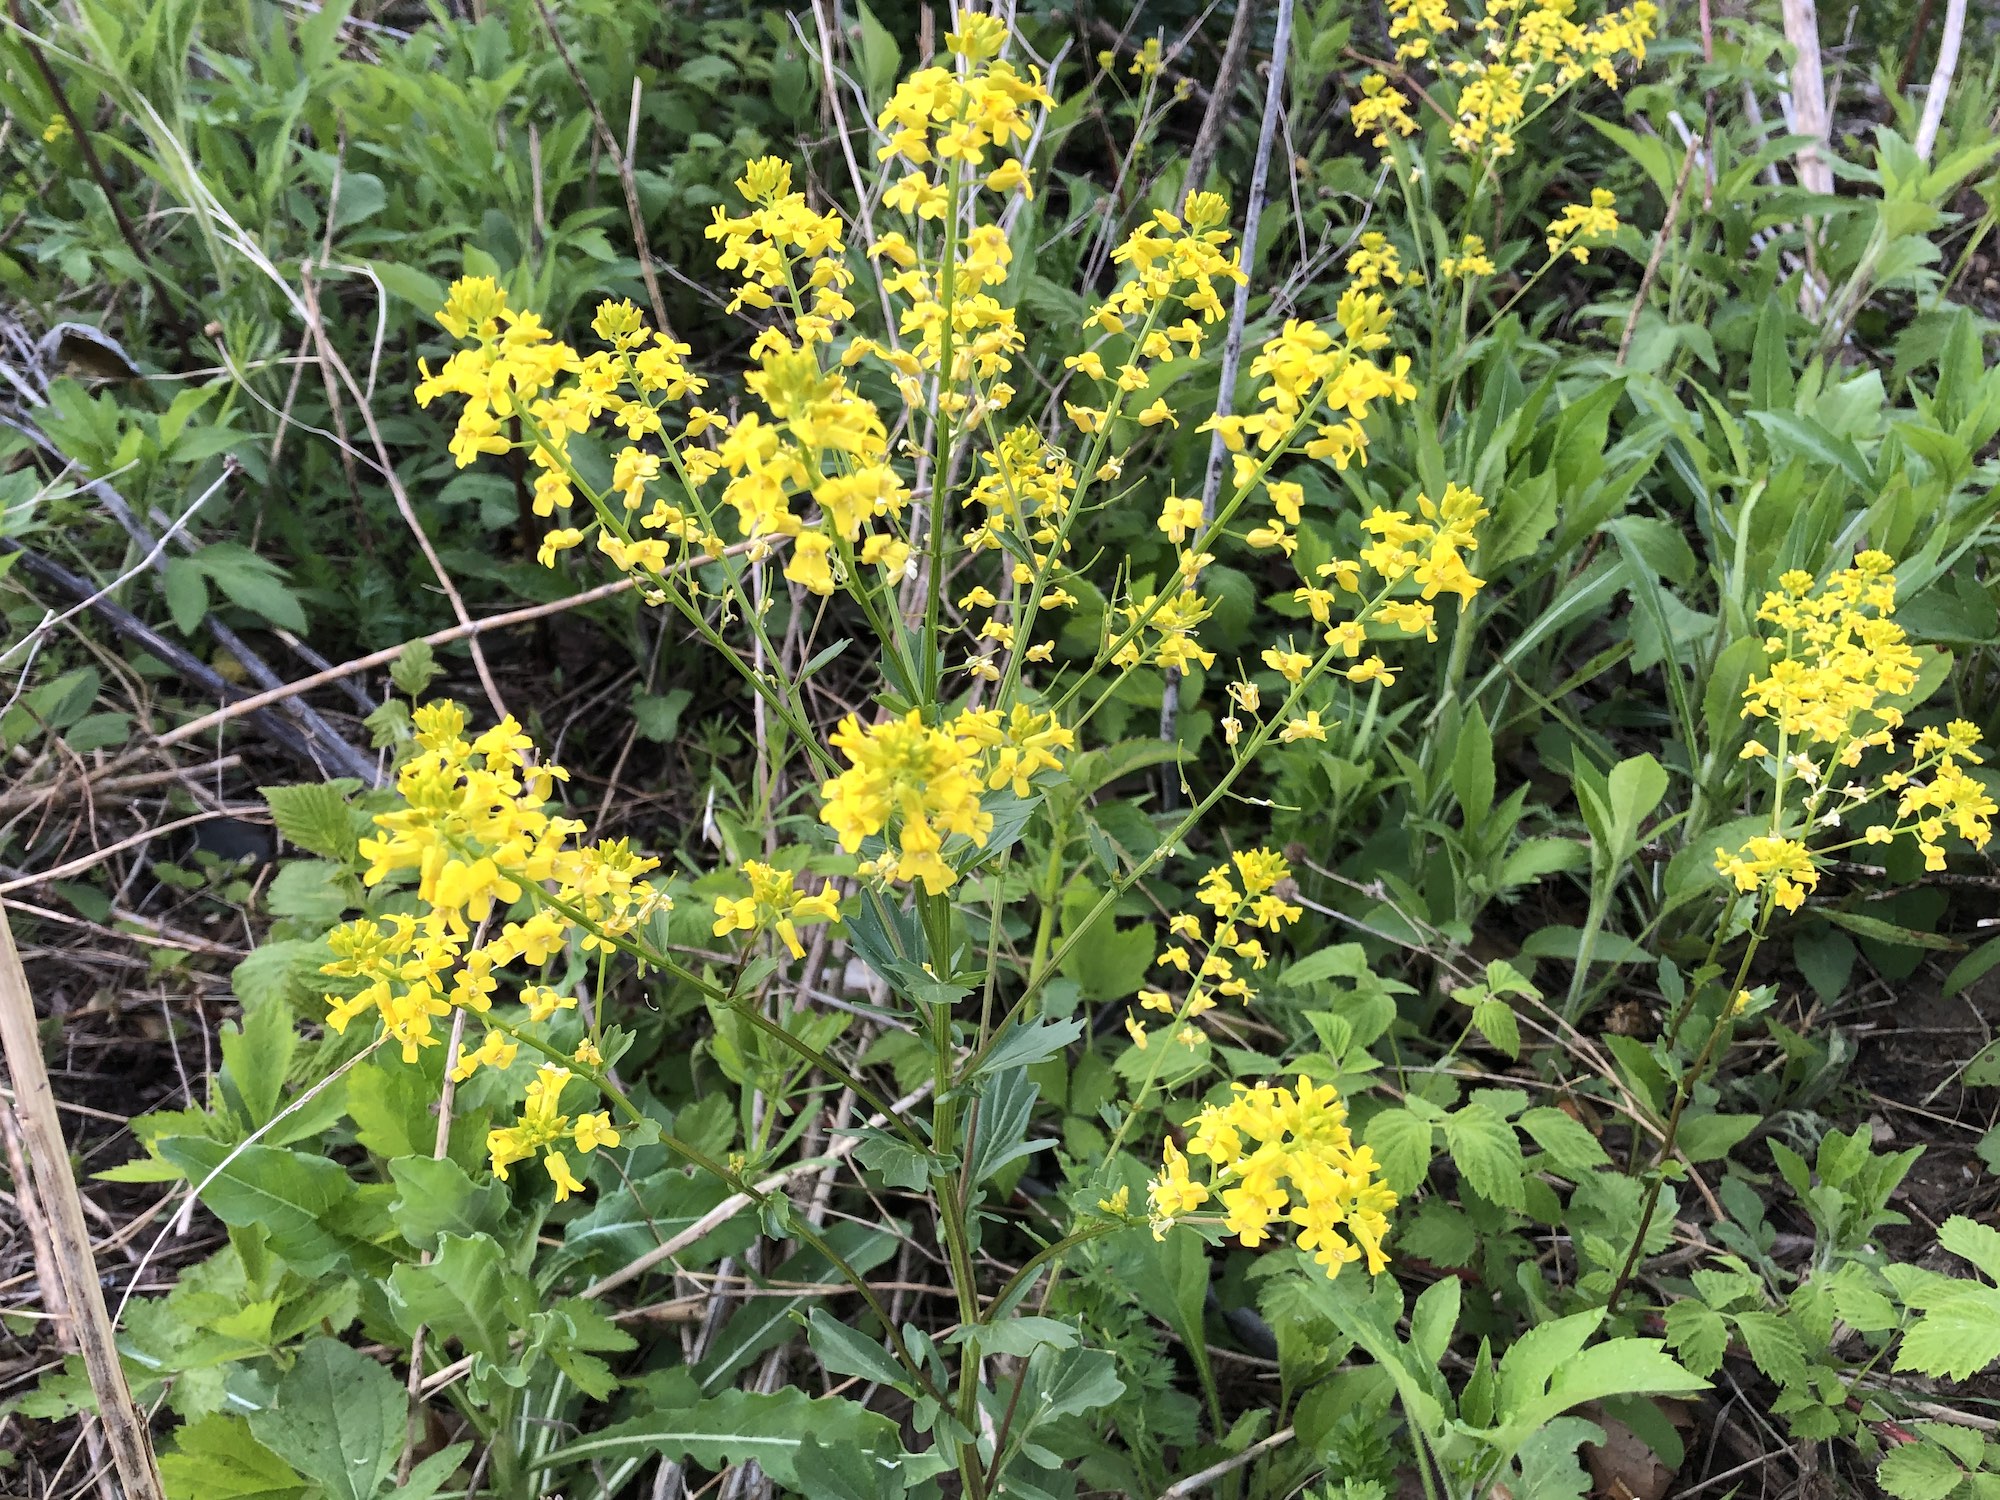 Garden Yellow Rocket in woods between Marion Dunn and Oak Savanna on May 14, 2019.